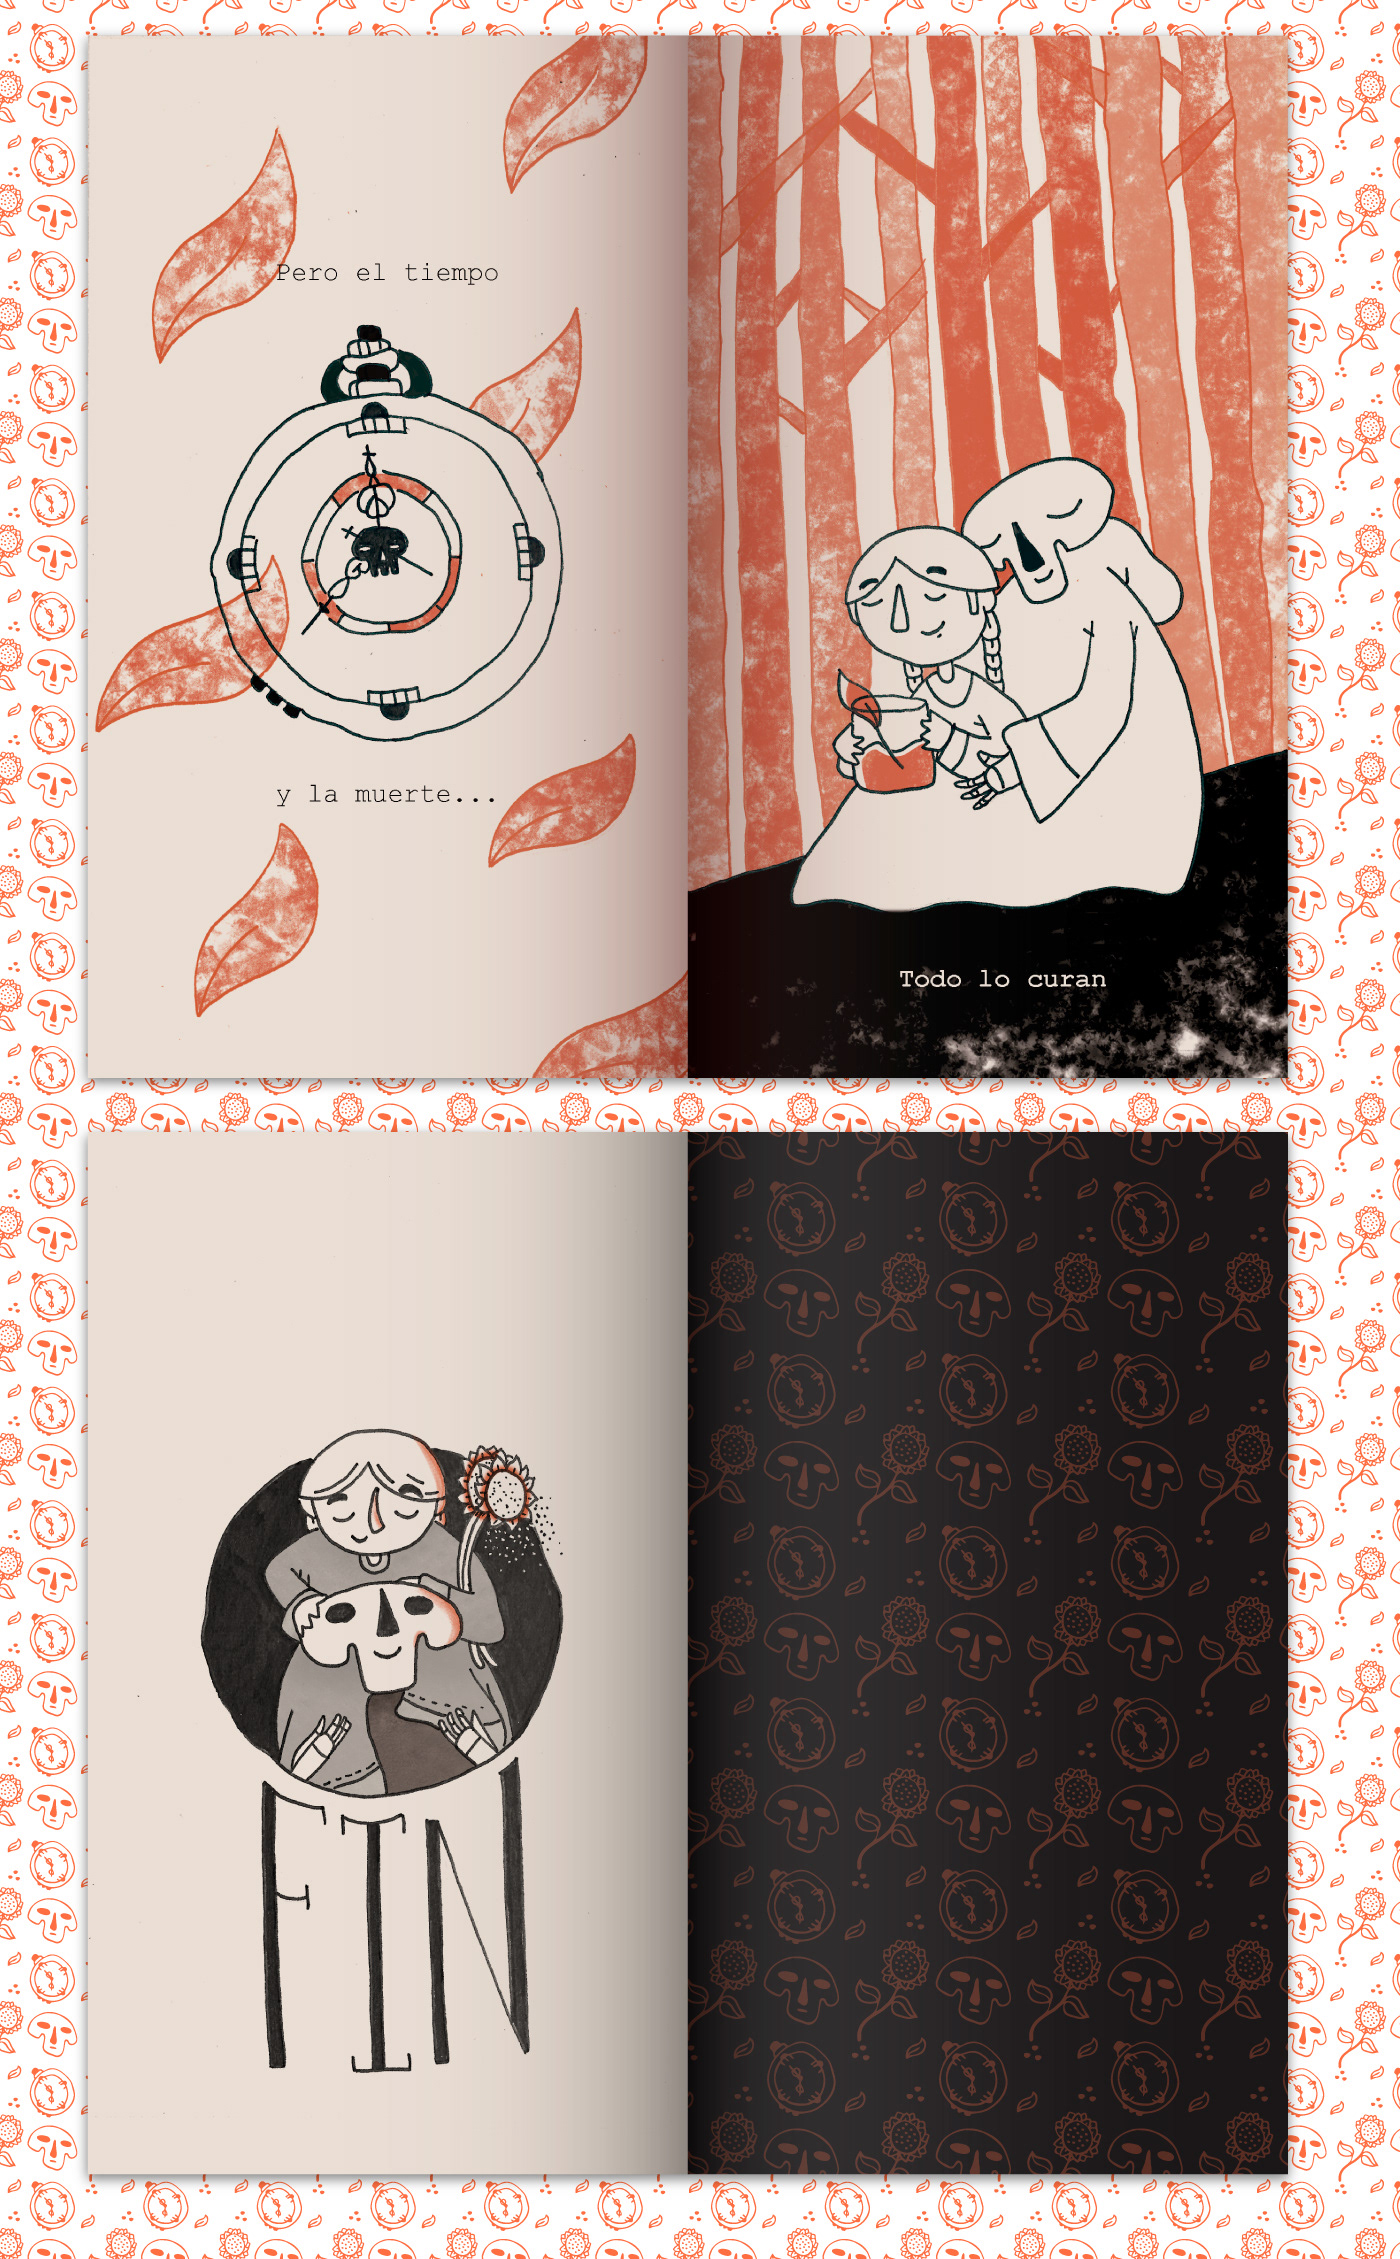 Riso death fanzine short story children illustration sunflower pattern Muerte cuento duo tone